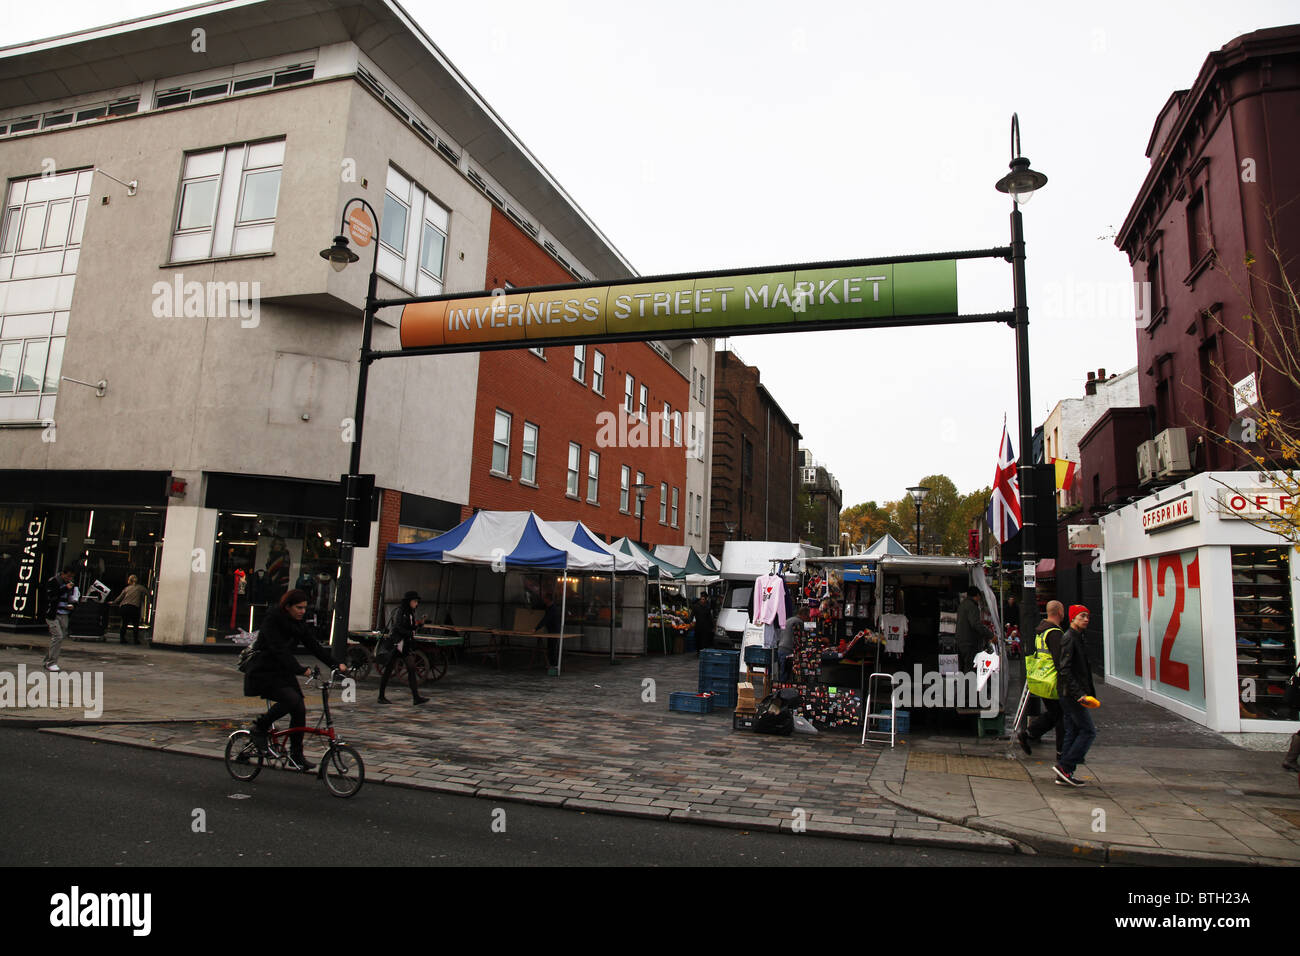 Inverness Street Market. Camden High Street. London Stockfoto